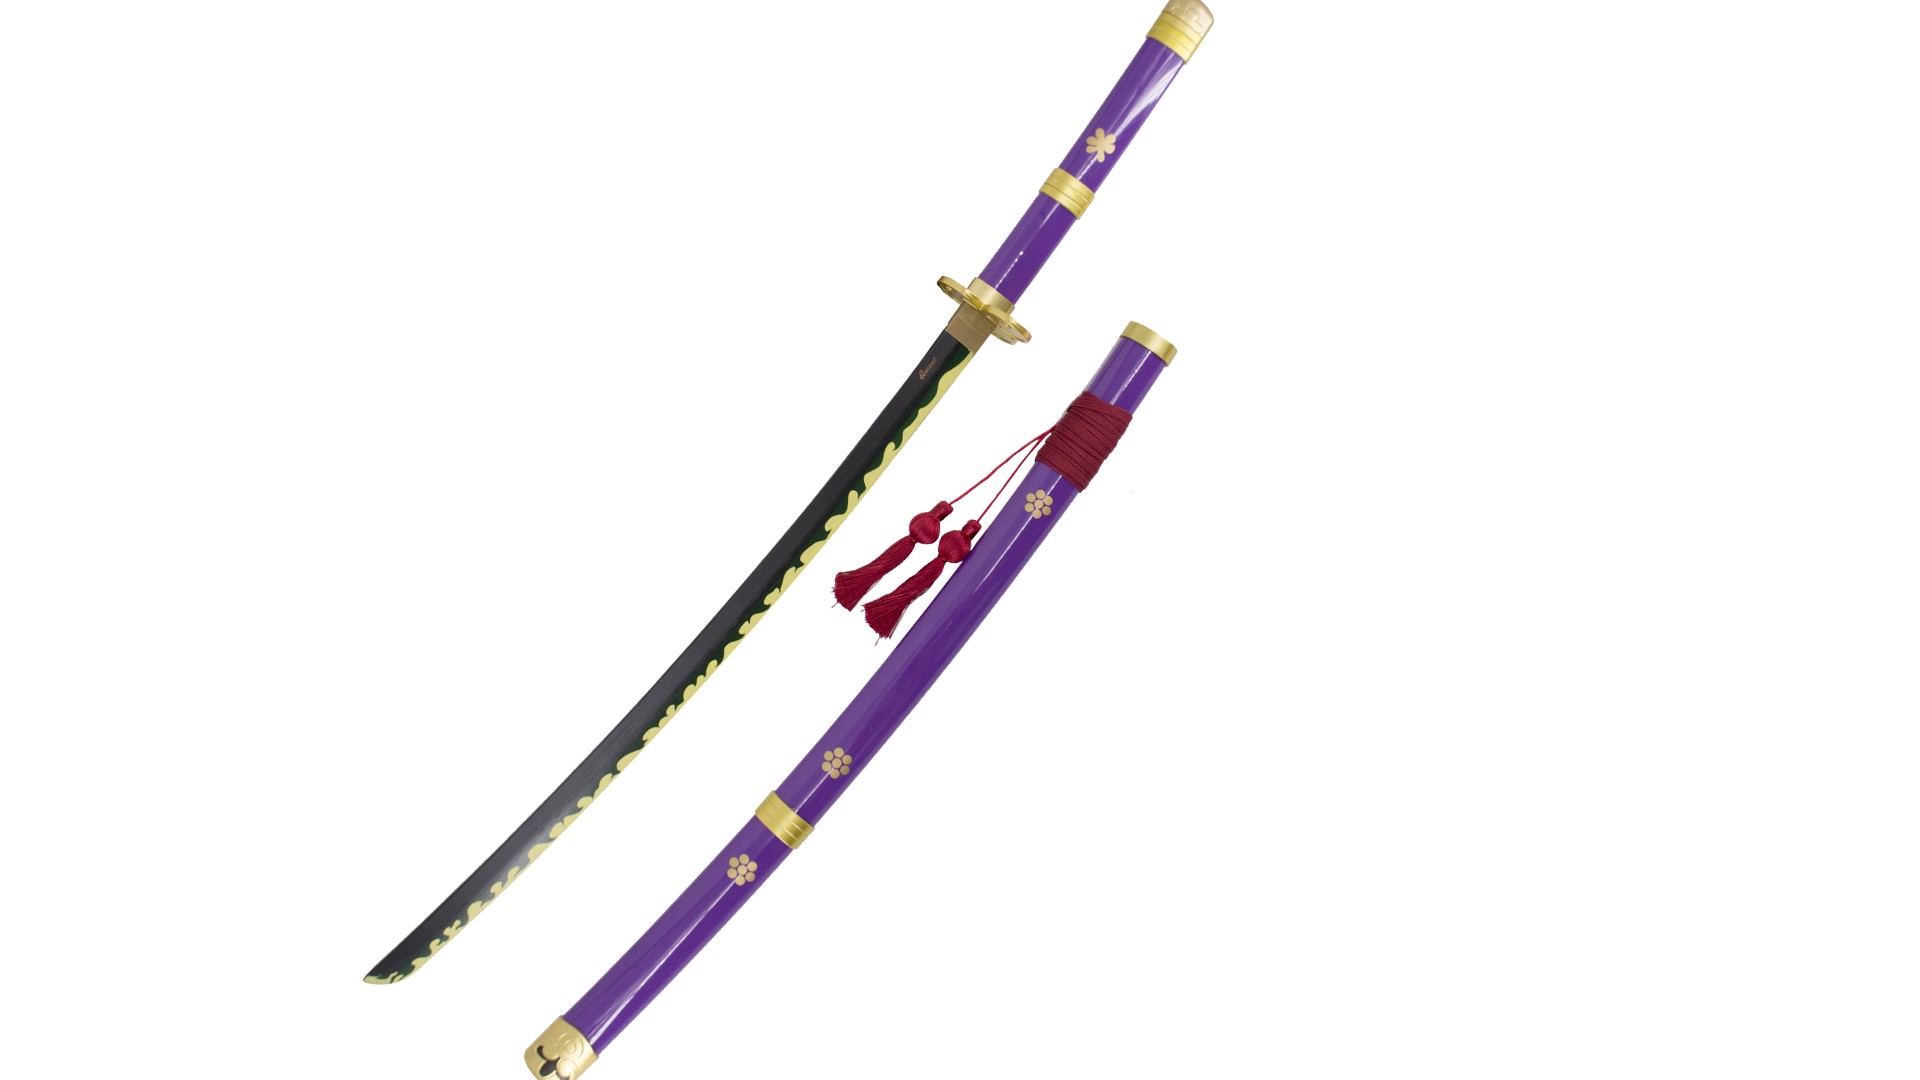 Katana Enma con hoja de bambú Zoro One Piece s5032 > Espadas y mas